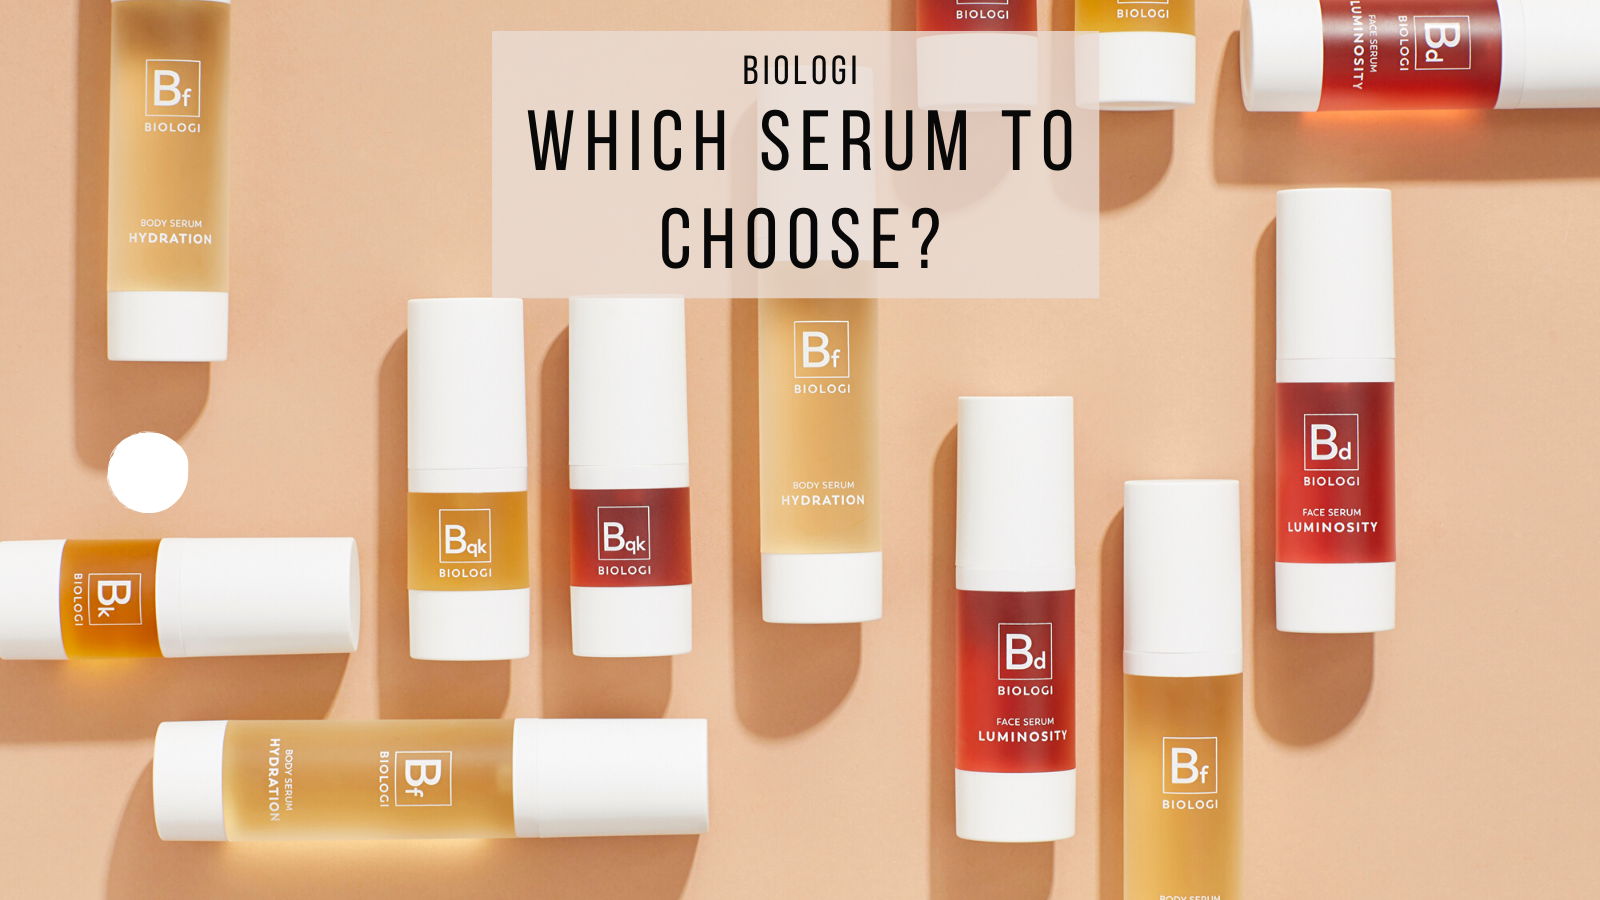 Biologi - which serum to choose?